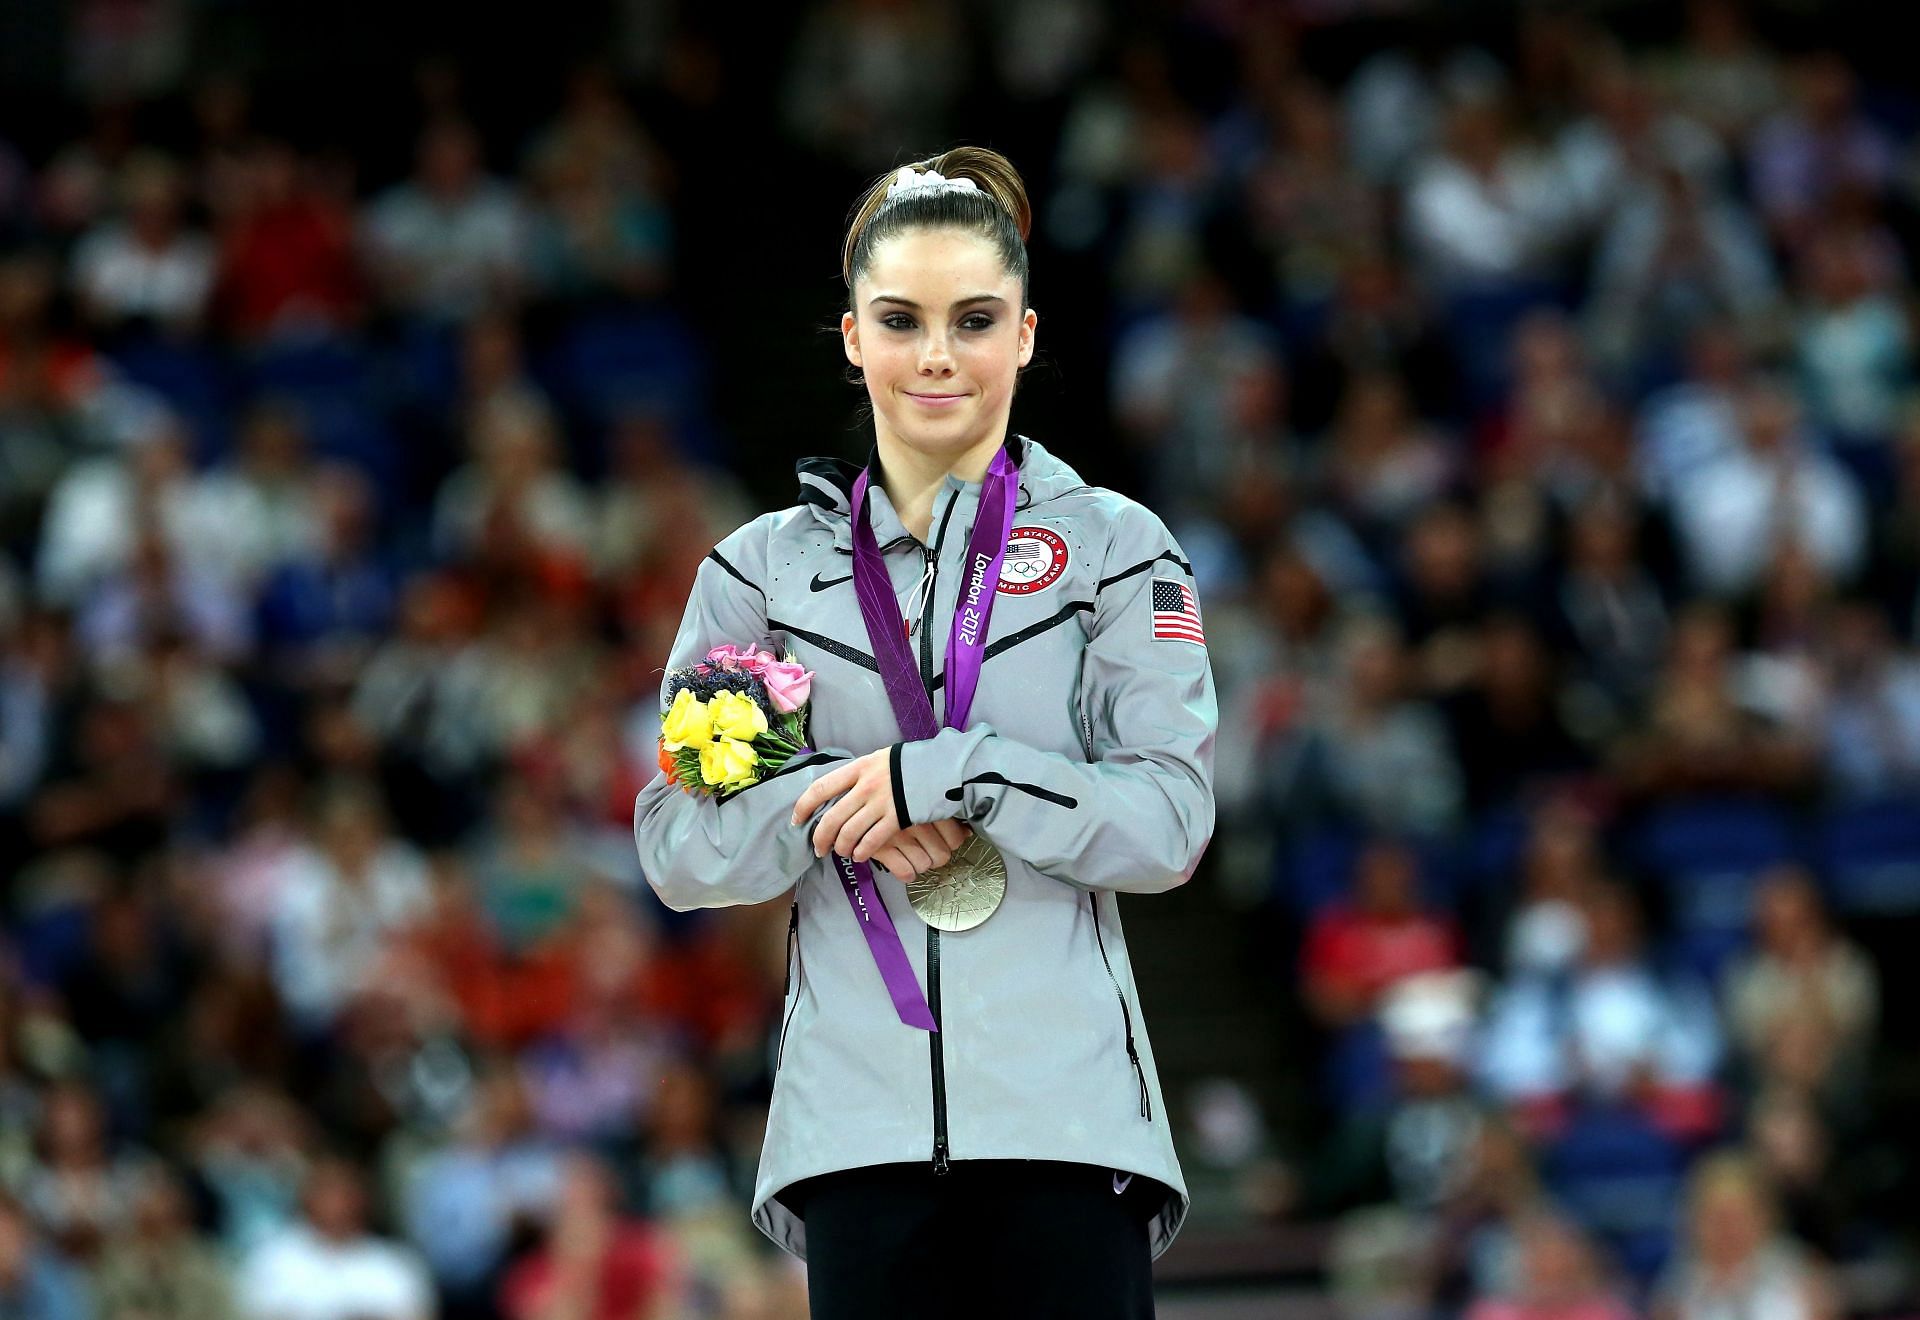 McKayla Maroney at the 2012 London Olympics (Image courtesy: Getty)